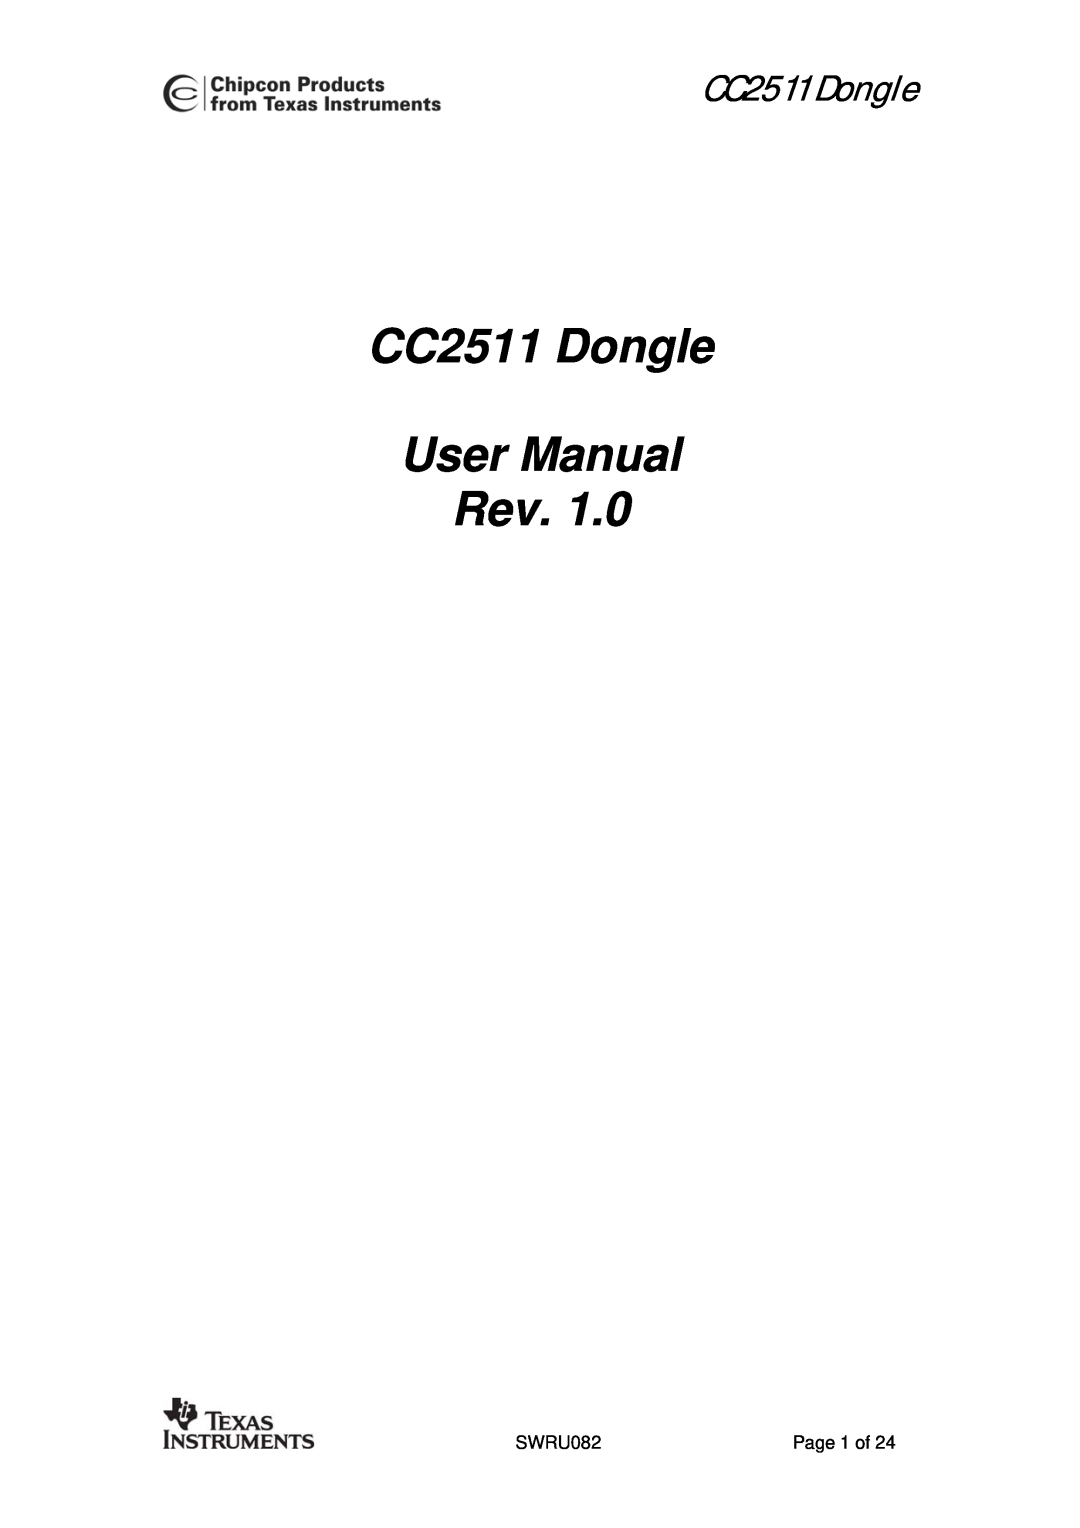 Texas Instruments user manual CC2511 Dongle User Manual Rev 